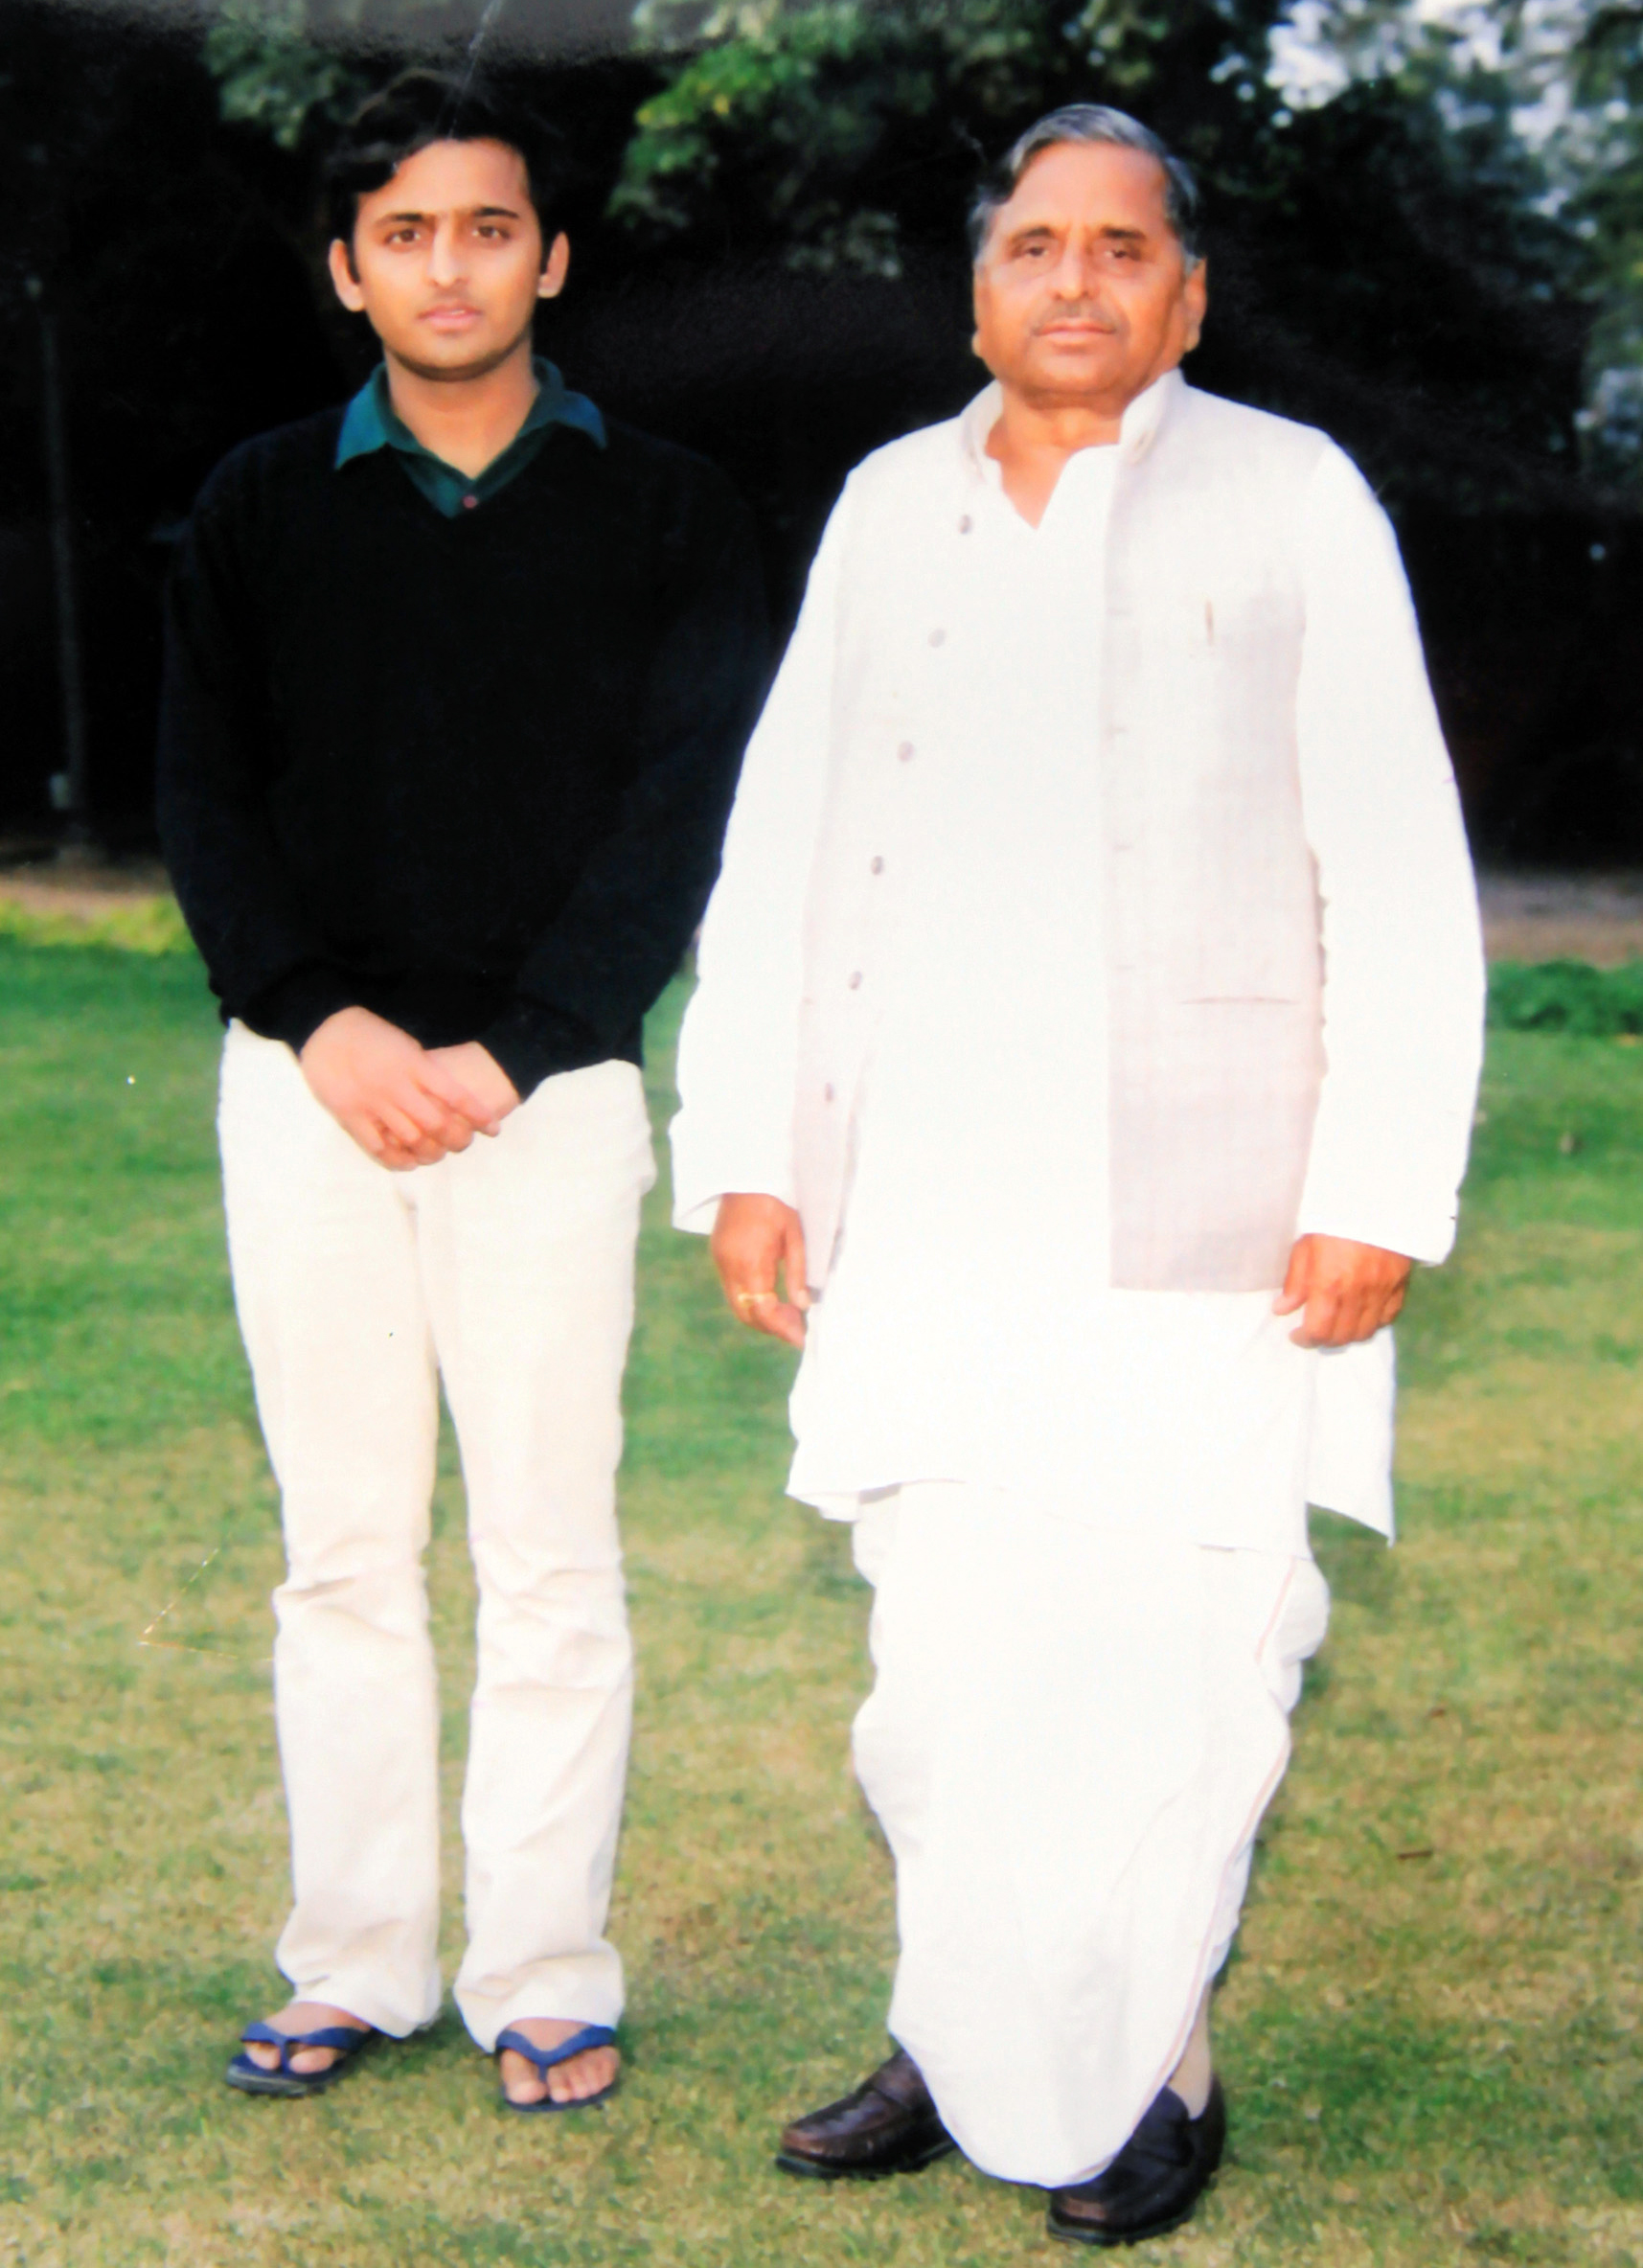 Mulayam Singh Yadav  National Politics v  Netaji  Samajwadi Party  നേതാജി  മുലായം  സമാജ്‌വാദി പാര്‍ട്ടി  മുലായം സിംഗ്  ഗുസ്‌തി താരം  റാം മനോഹര്‍ ലോഹ്യ  ചരൺ സിങ്ങിന്‍റെ ഭാരതീയ ക്രാന്തി ദൾ  Mulayam Singh Yadav and National Politics